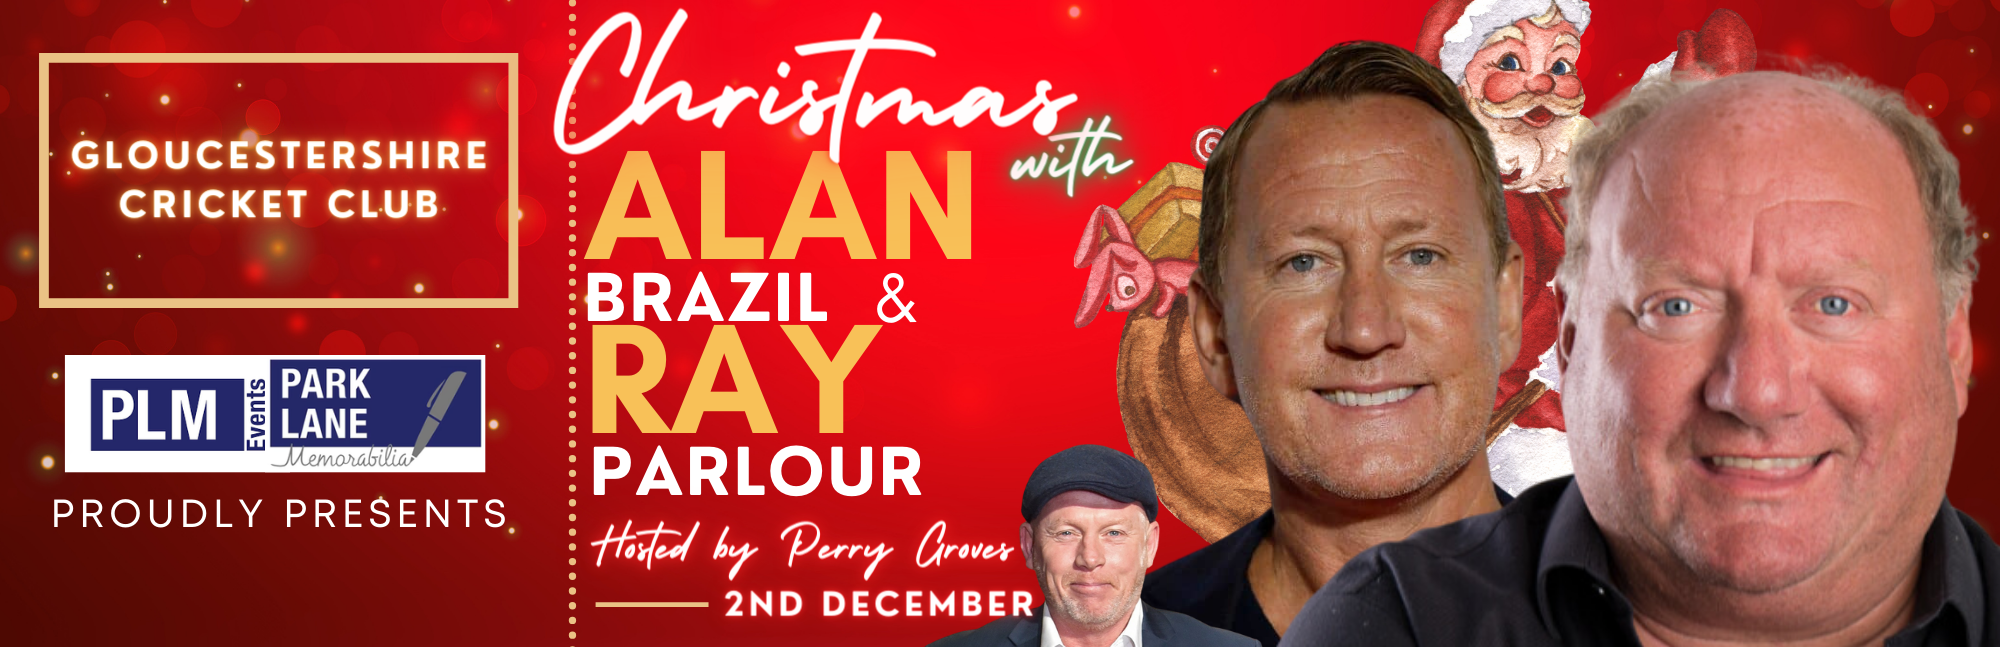 Christmas with Alan Brazil and Ray Parlour